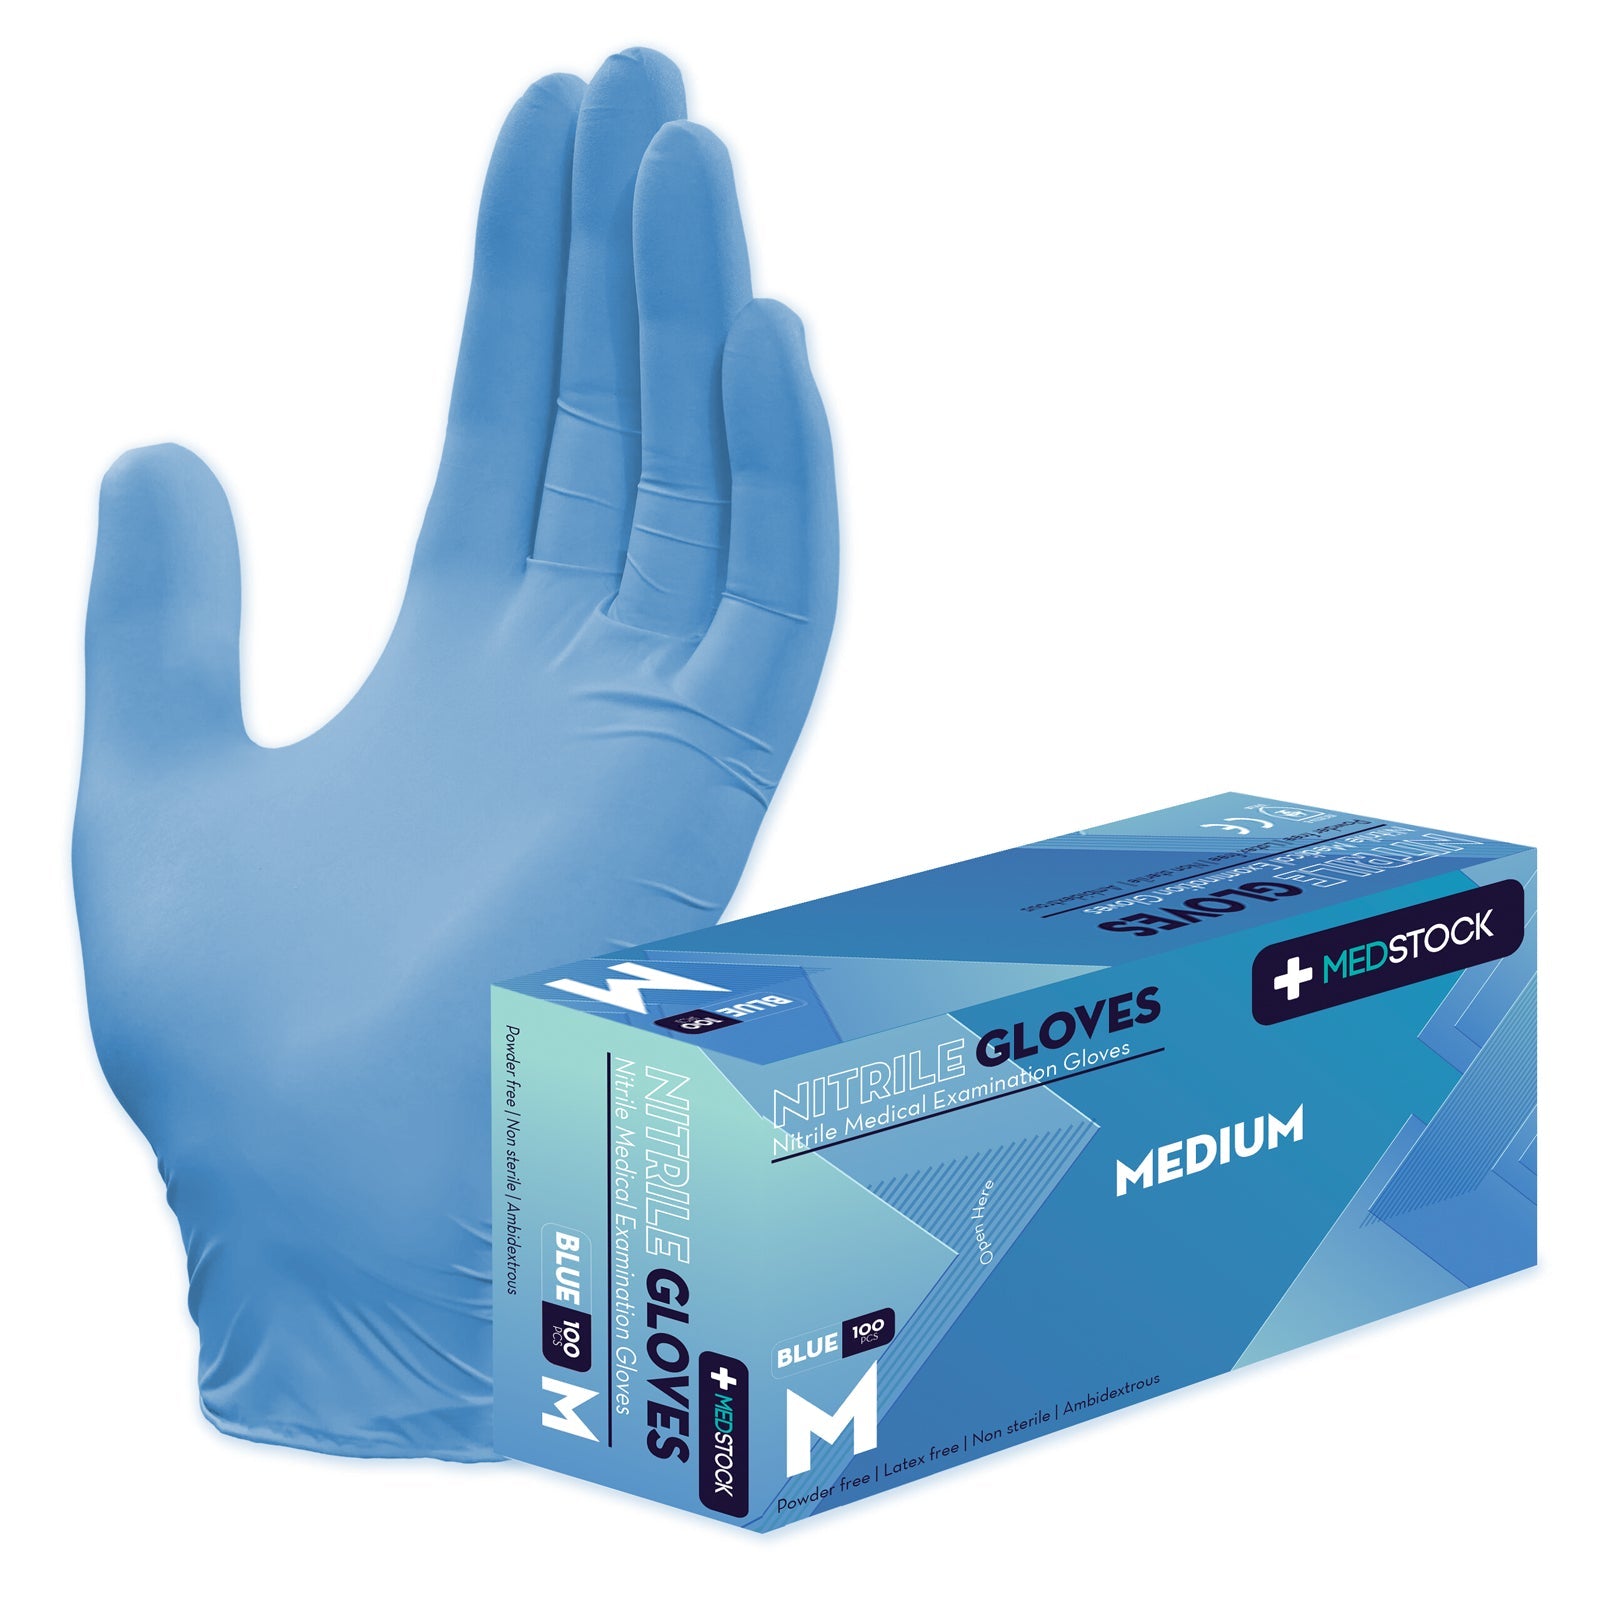 Medstock Blue Nitrile Medical Examination Gloves -Box of 100